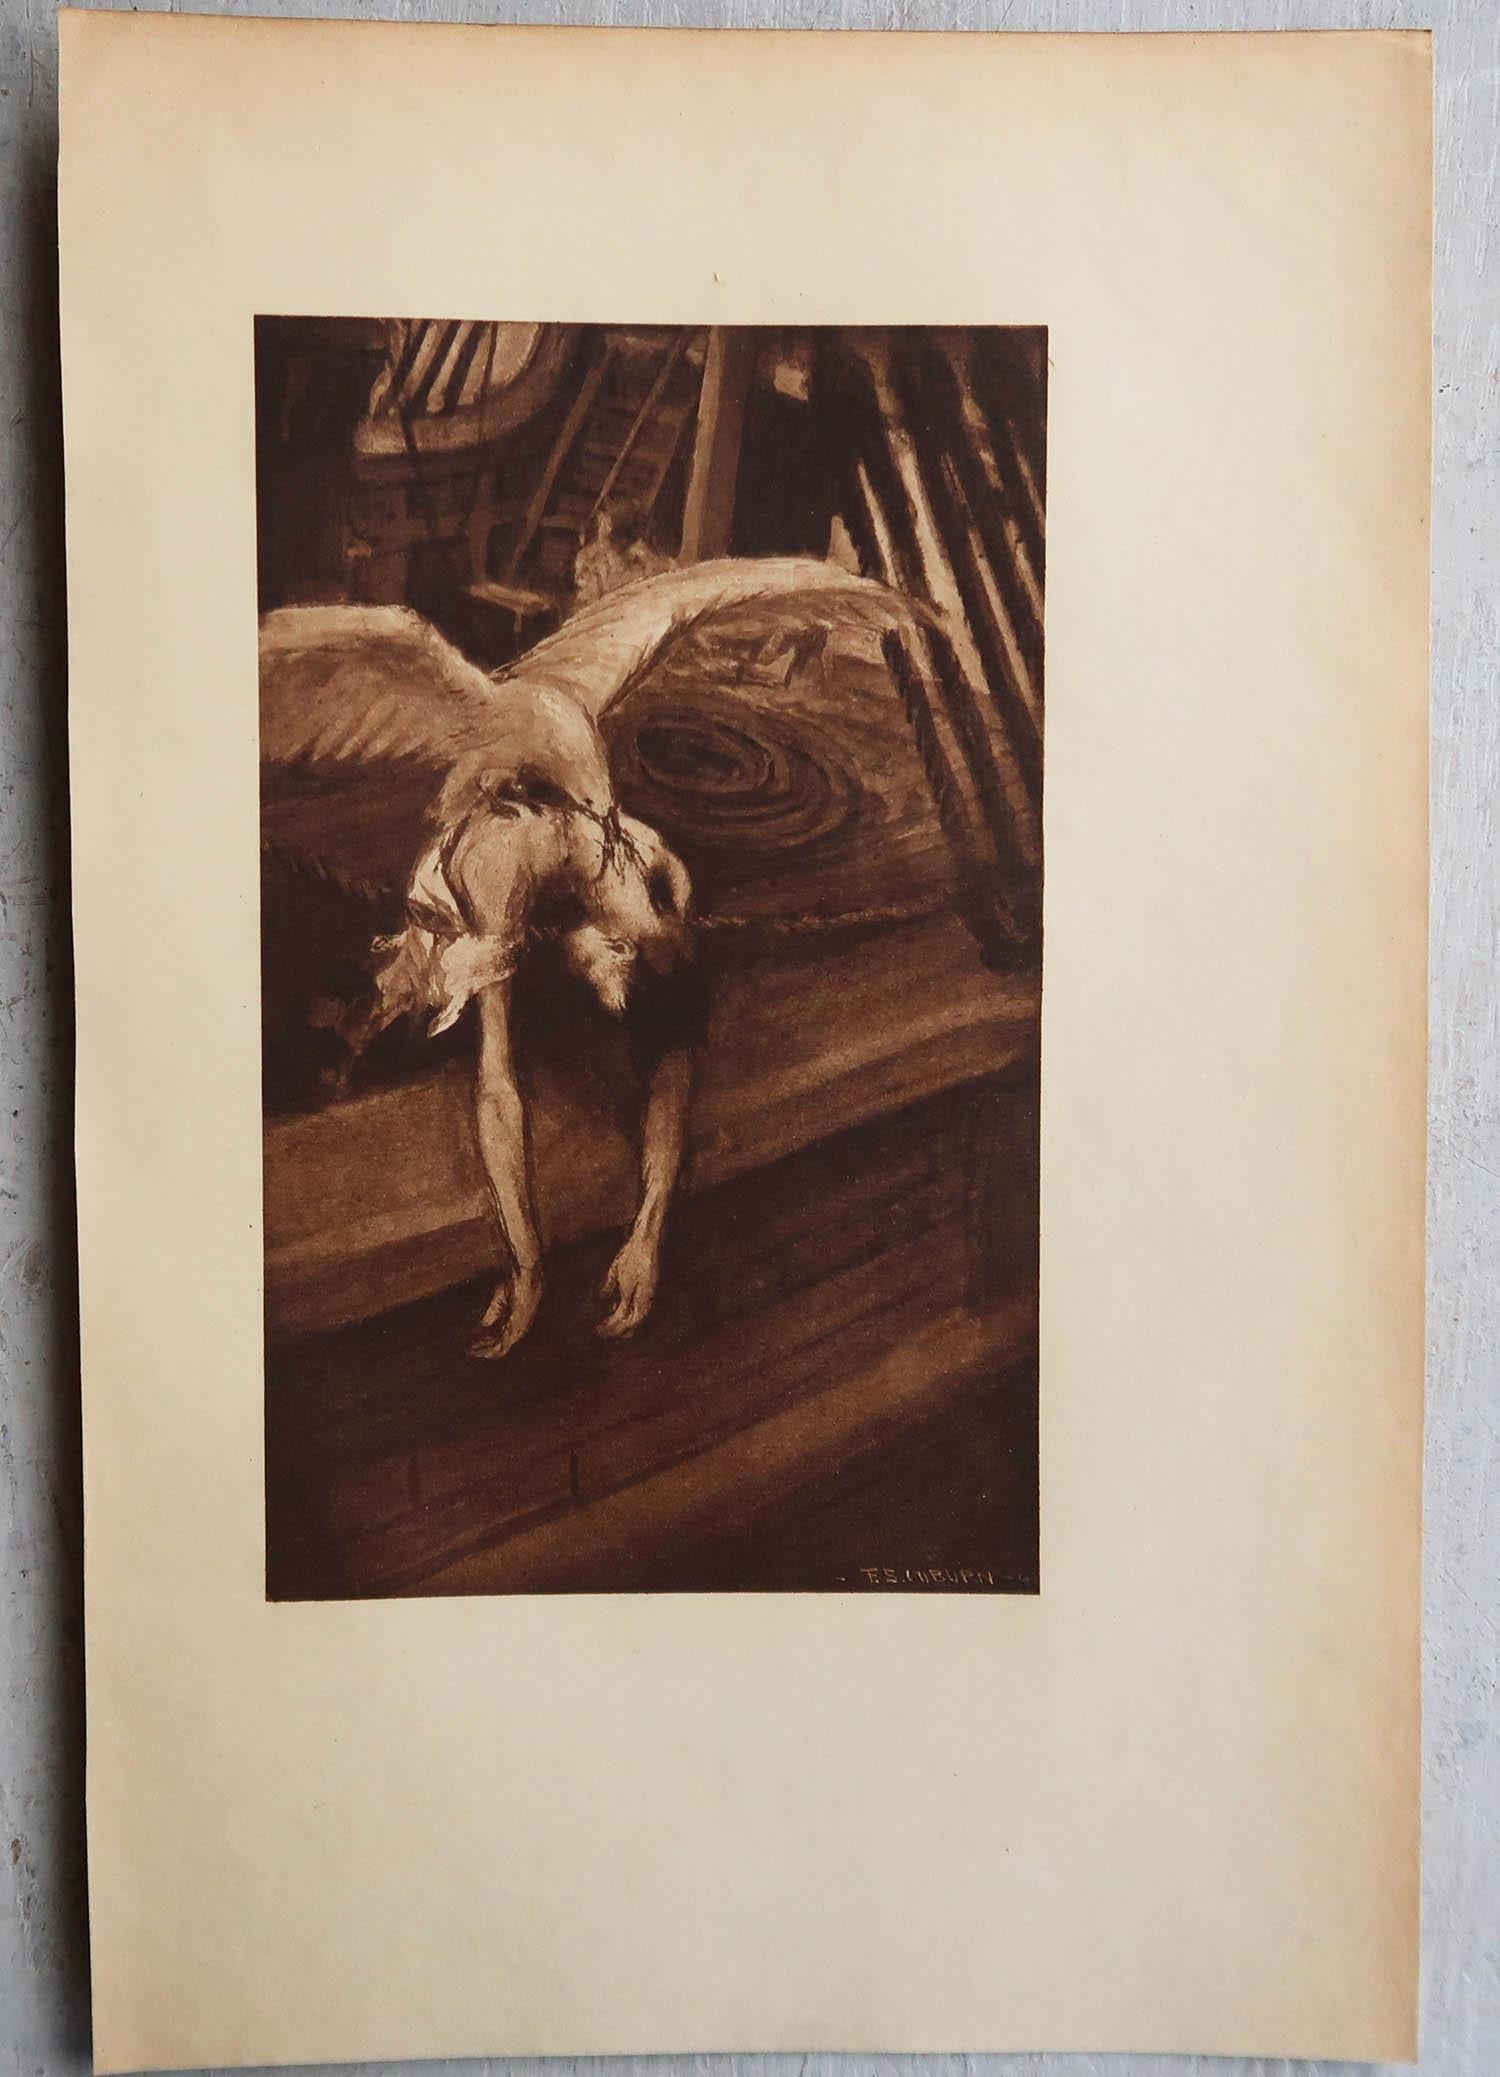 Romantic Original Limited Edition Print by Frederick S. Coburn, Narrative of Arthur G.Pym